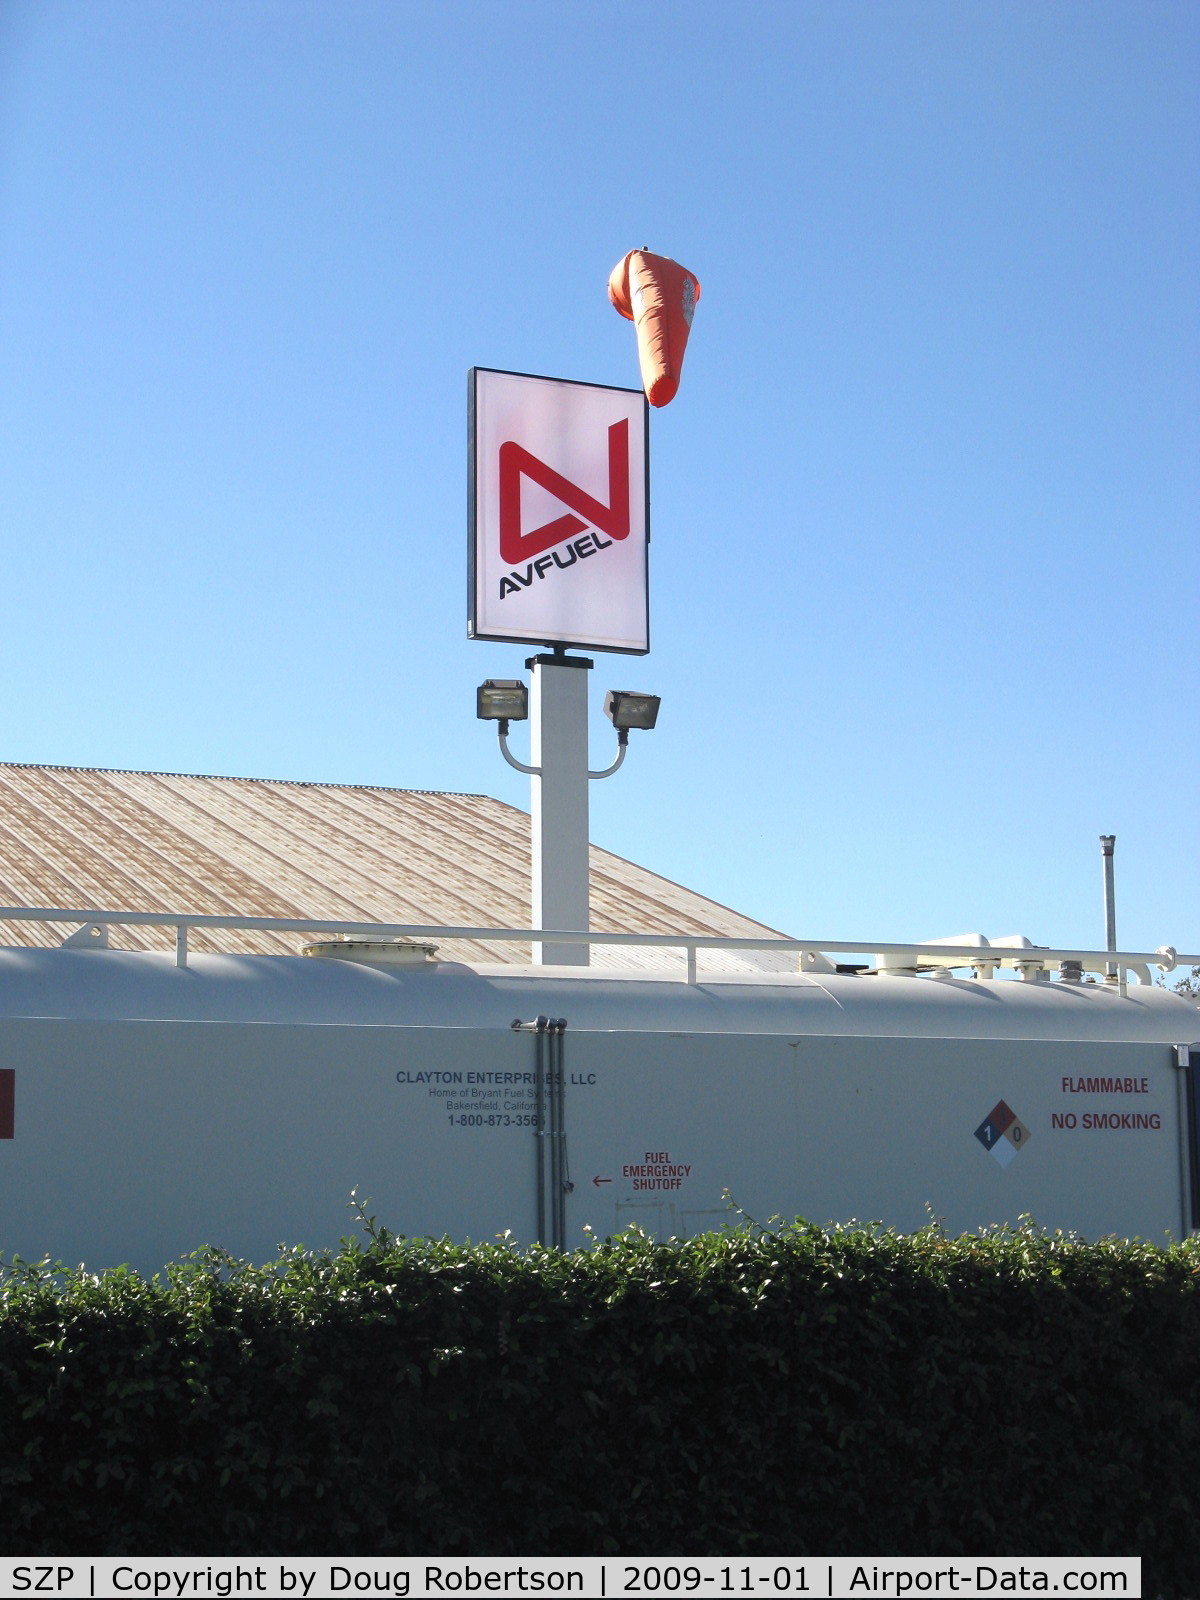 Santa Paula Airport (SZP) - AVFUEL sign-New bulk supplier for self-service refueling..